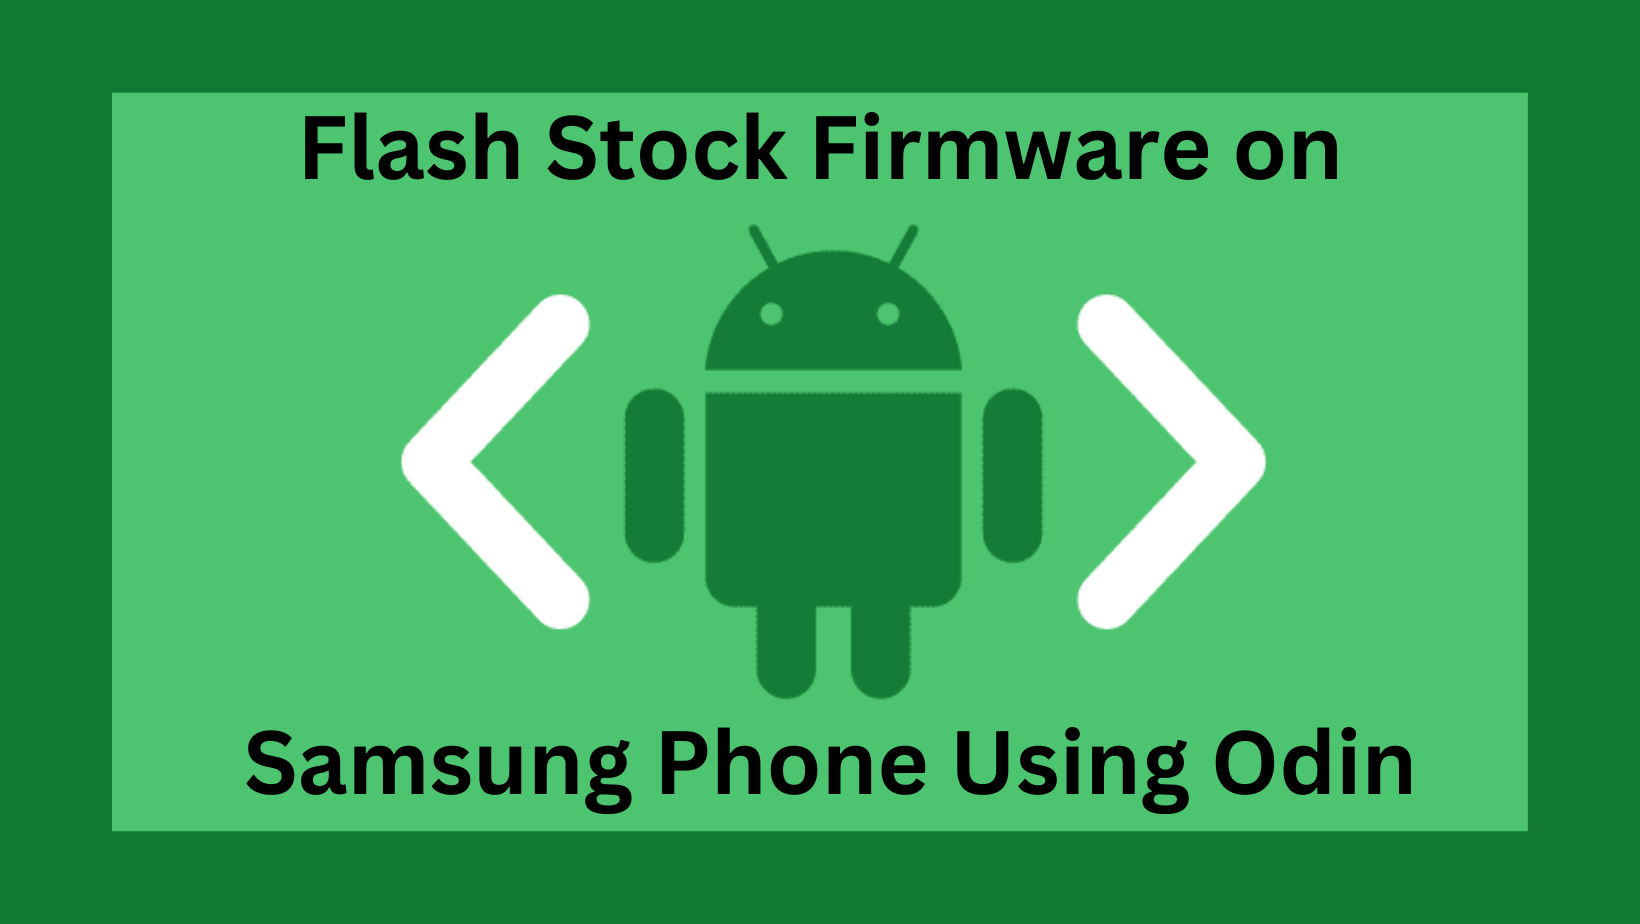 Flash Stock Firmware